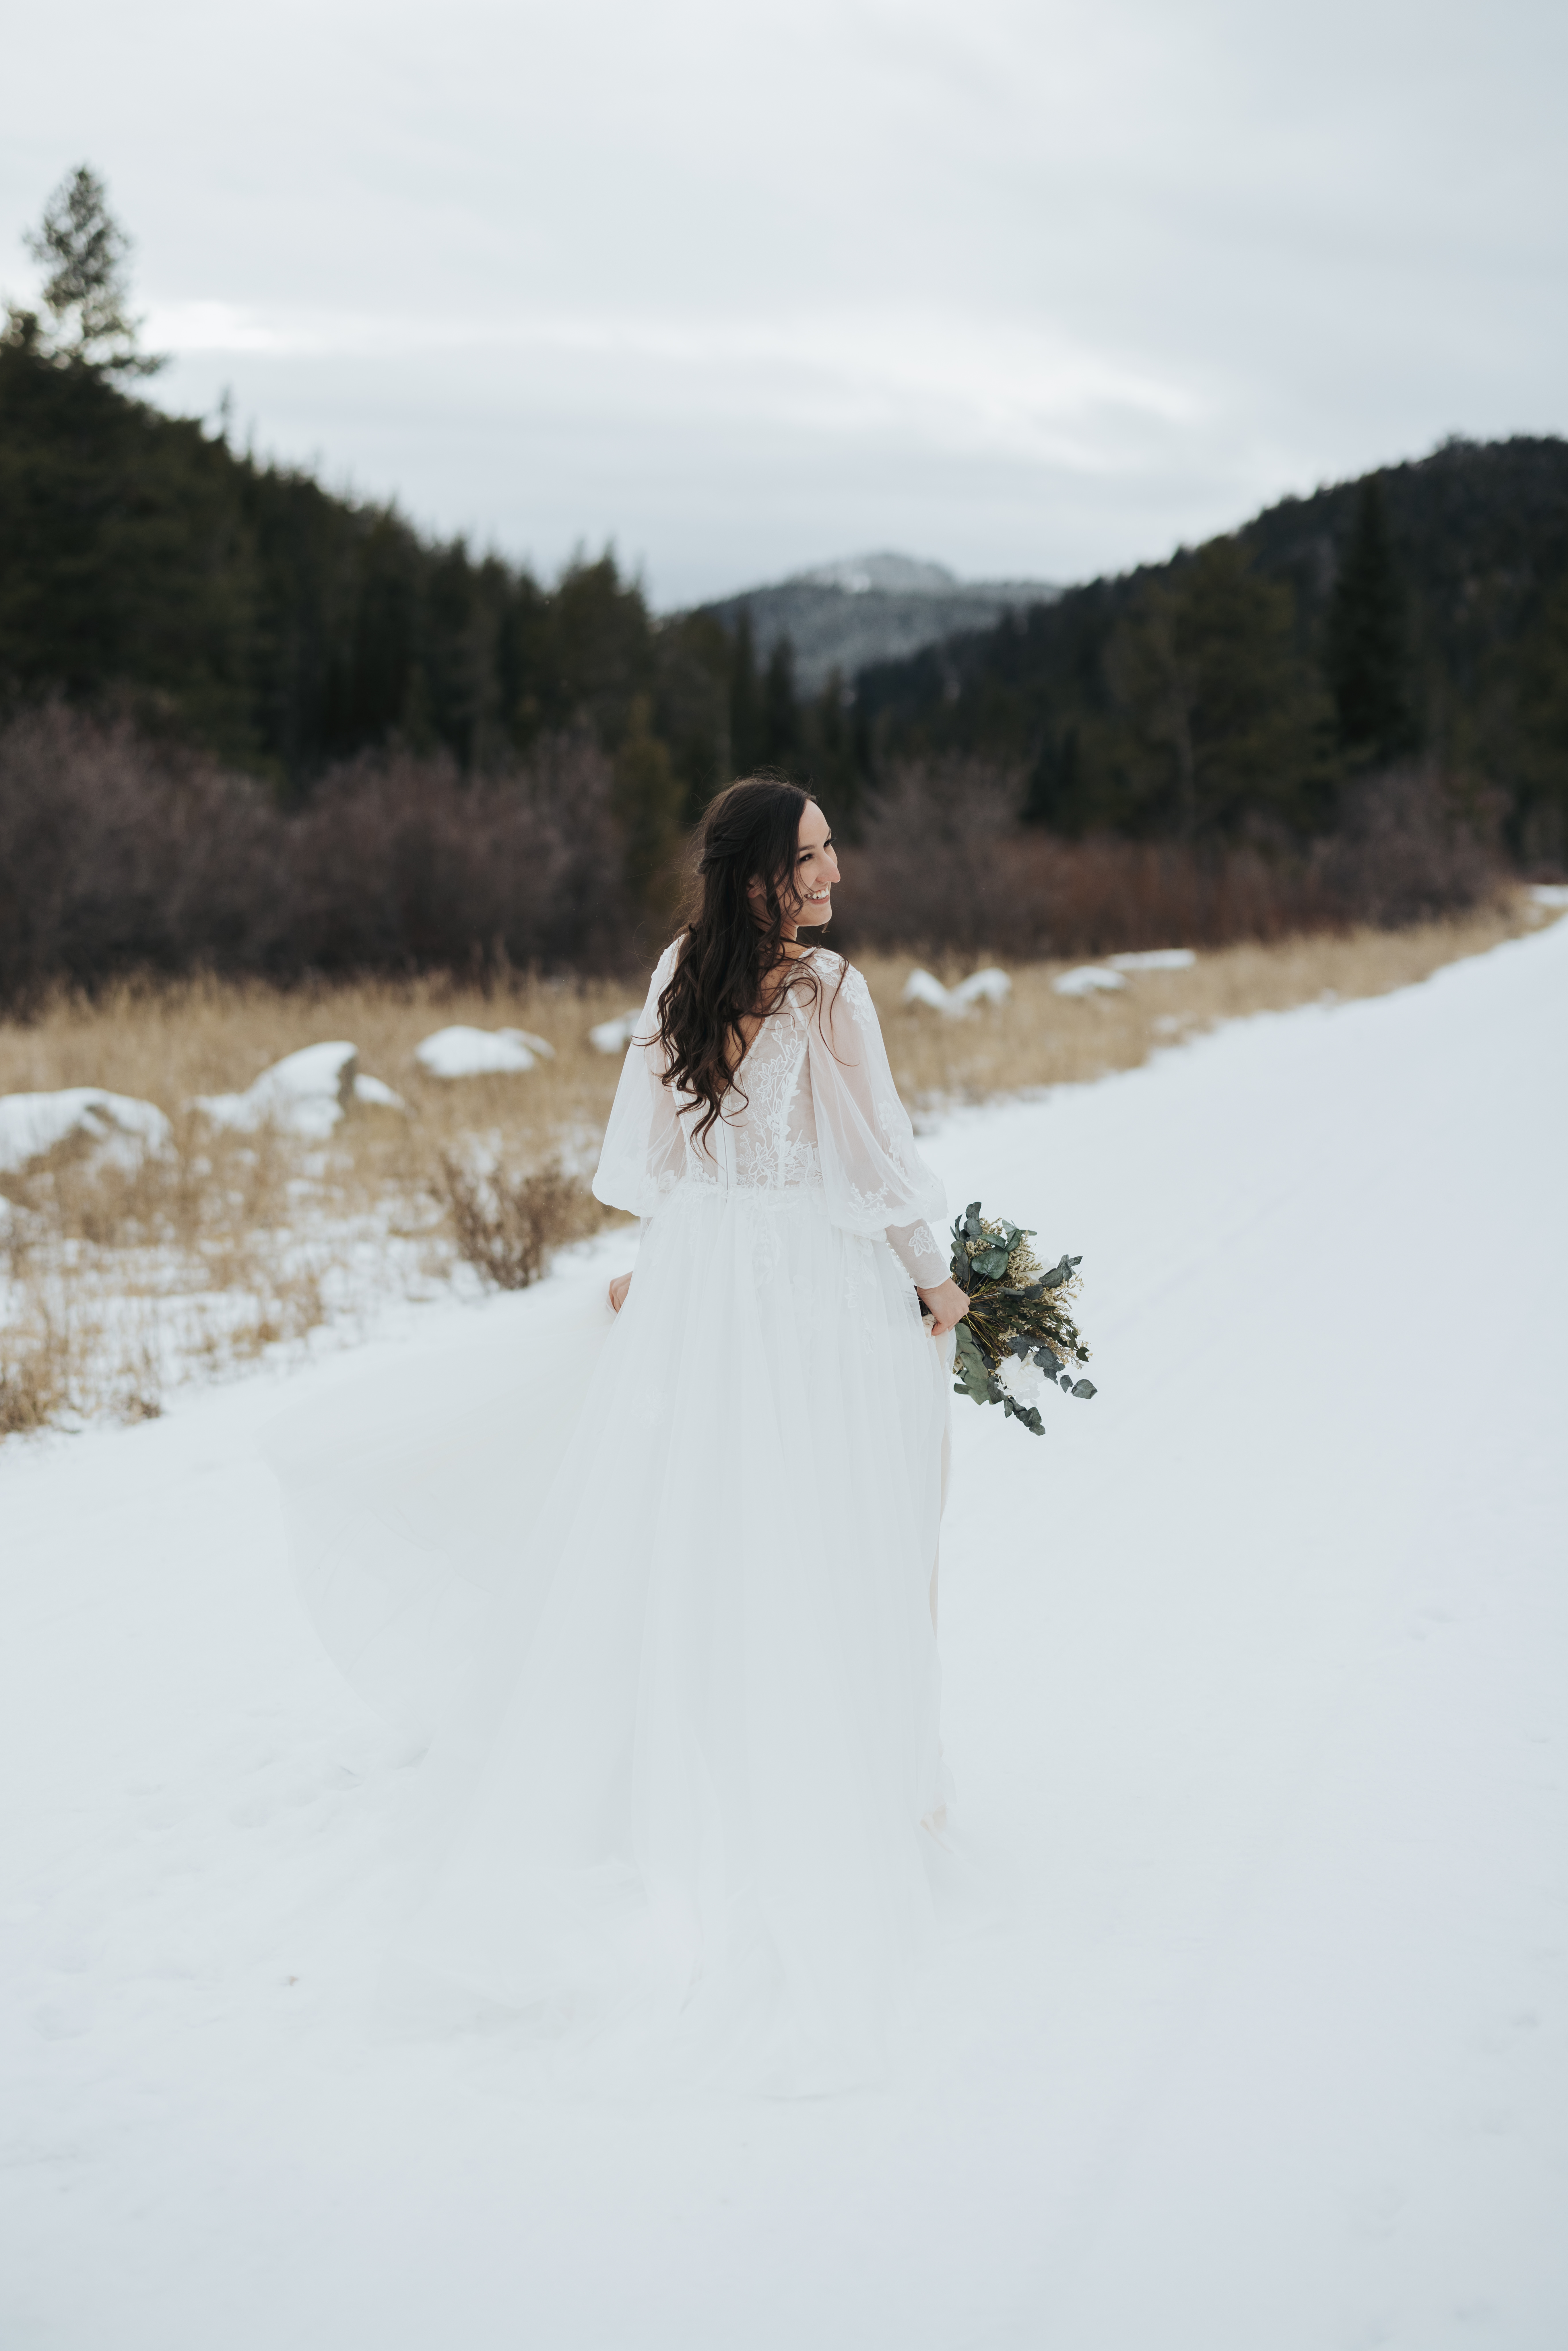 bride walking in snow with eucalyptus bouquet